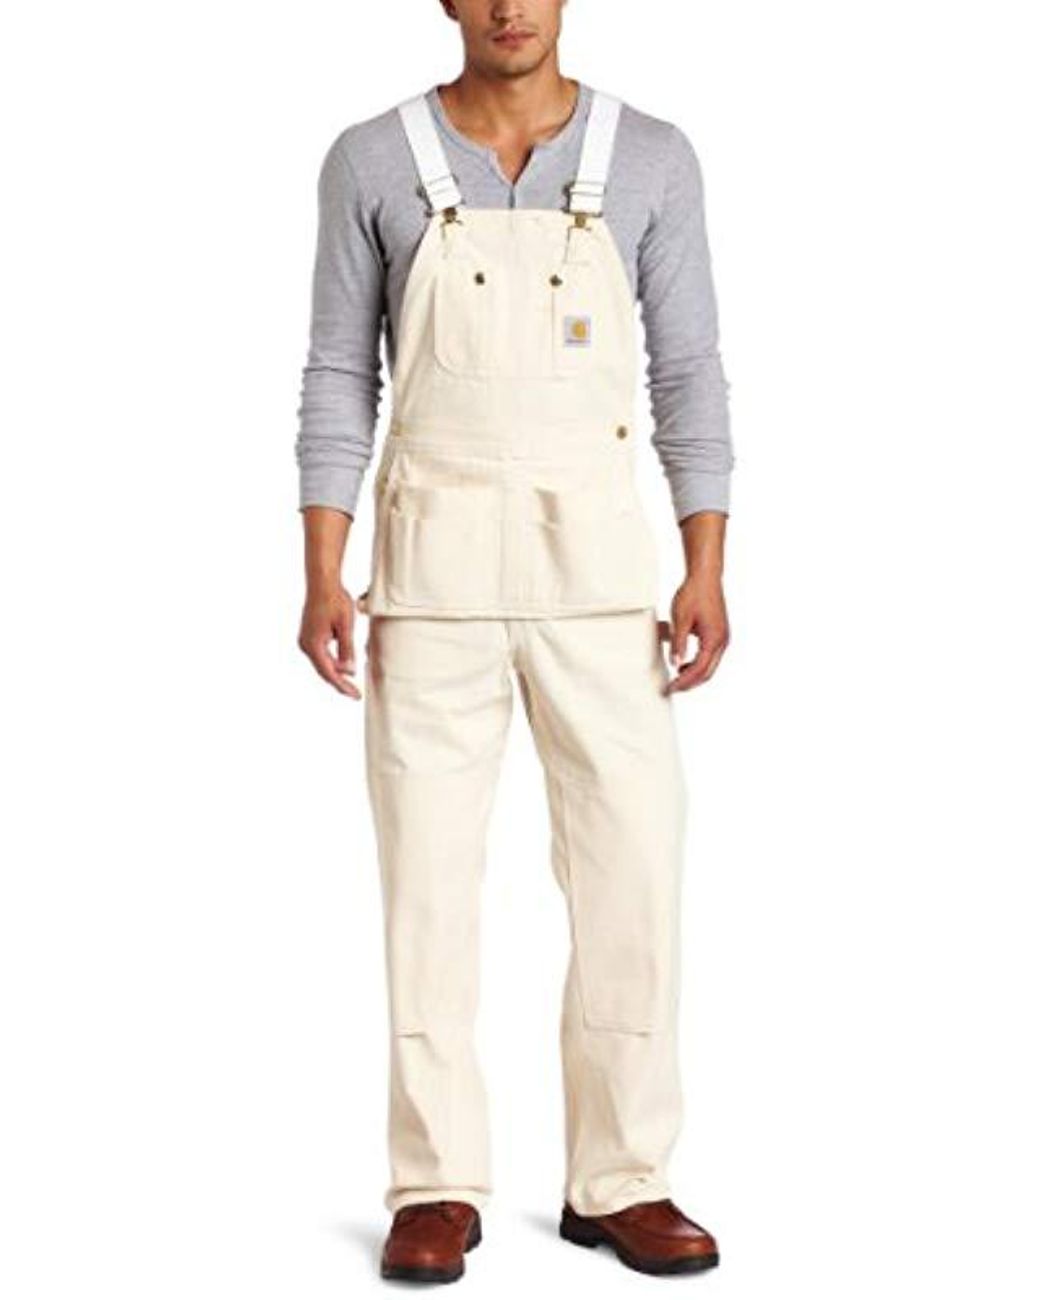 Carhartt Bib Overall Unlined Jeans Men's Size 46x28 Washed Distressed Denim  Blue | eBay